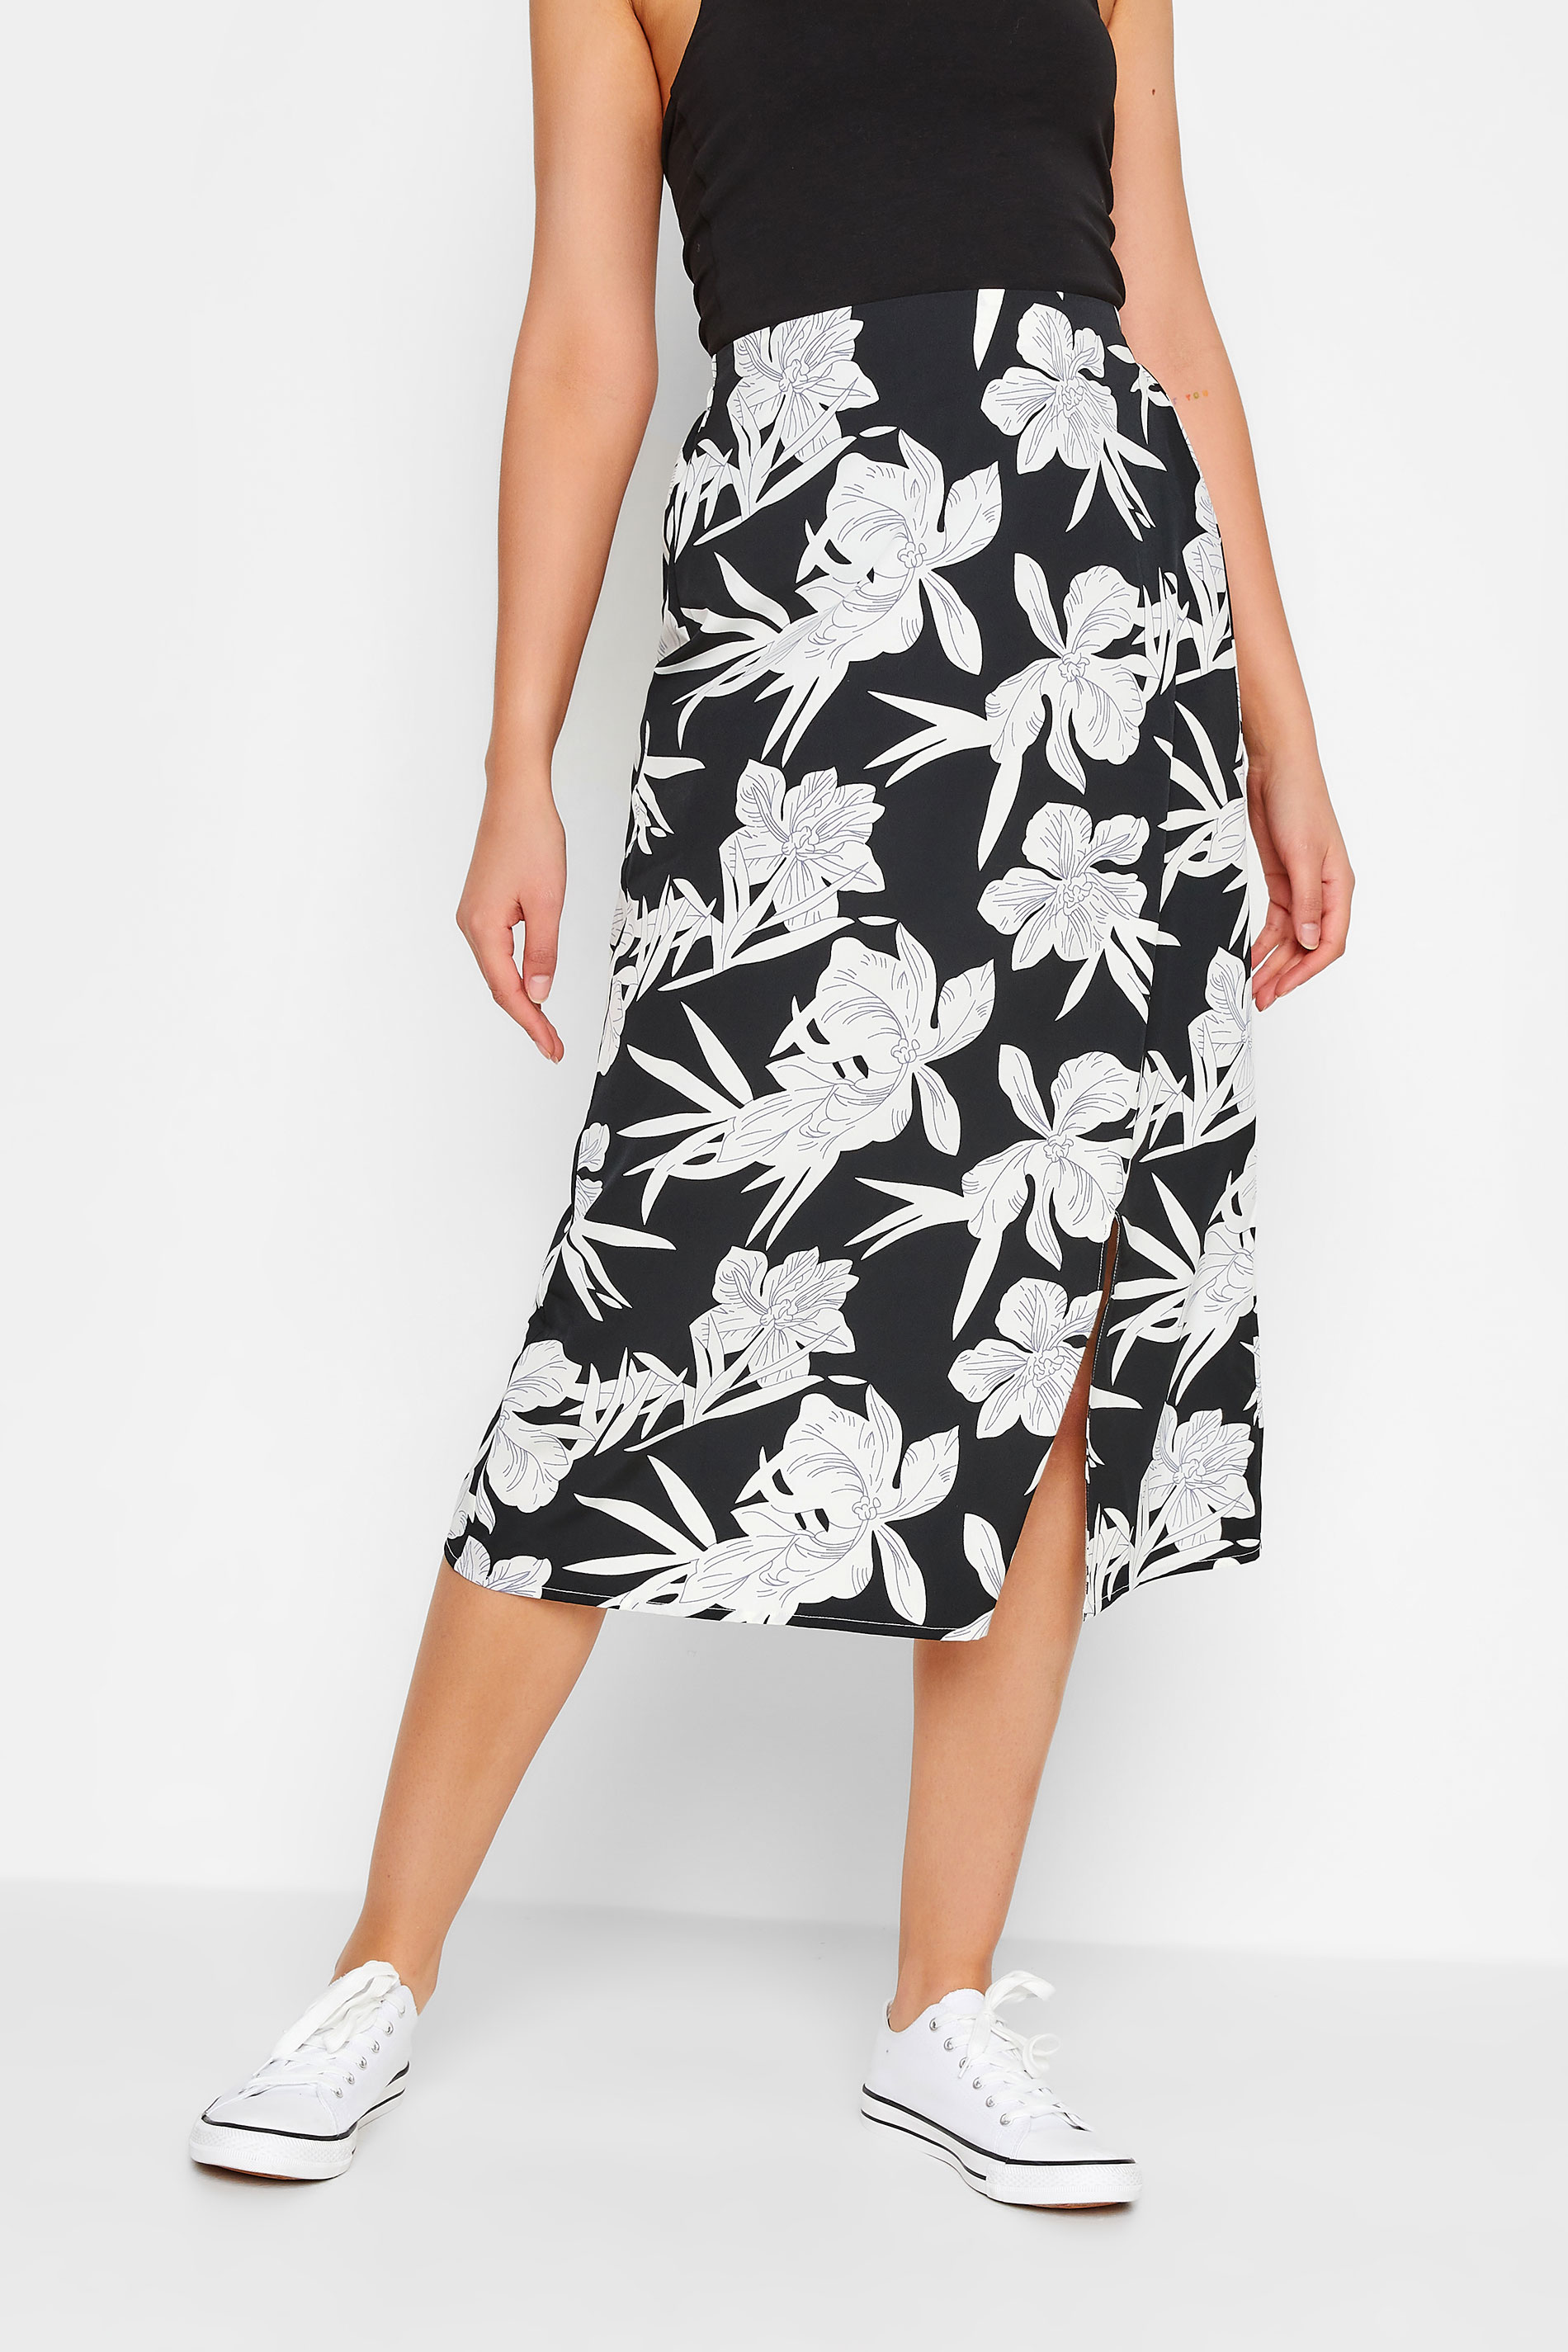 LTS Tall Women's Black Floral Midi Skirt | Long Tall Sally 1